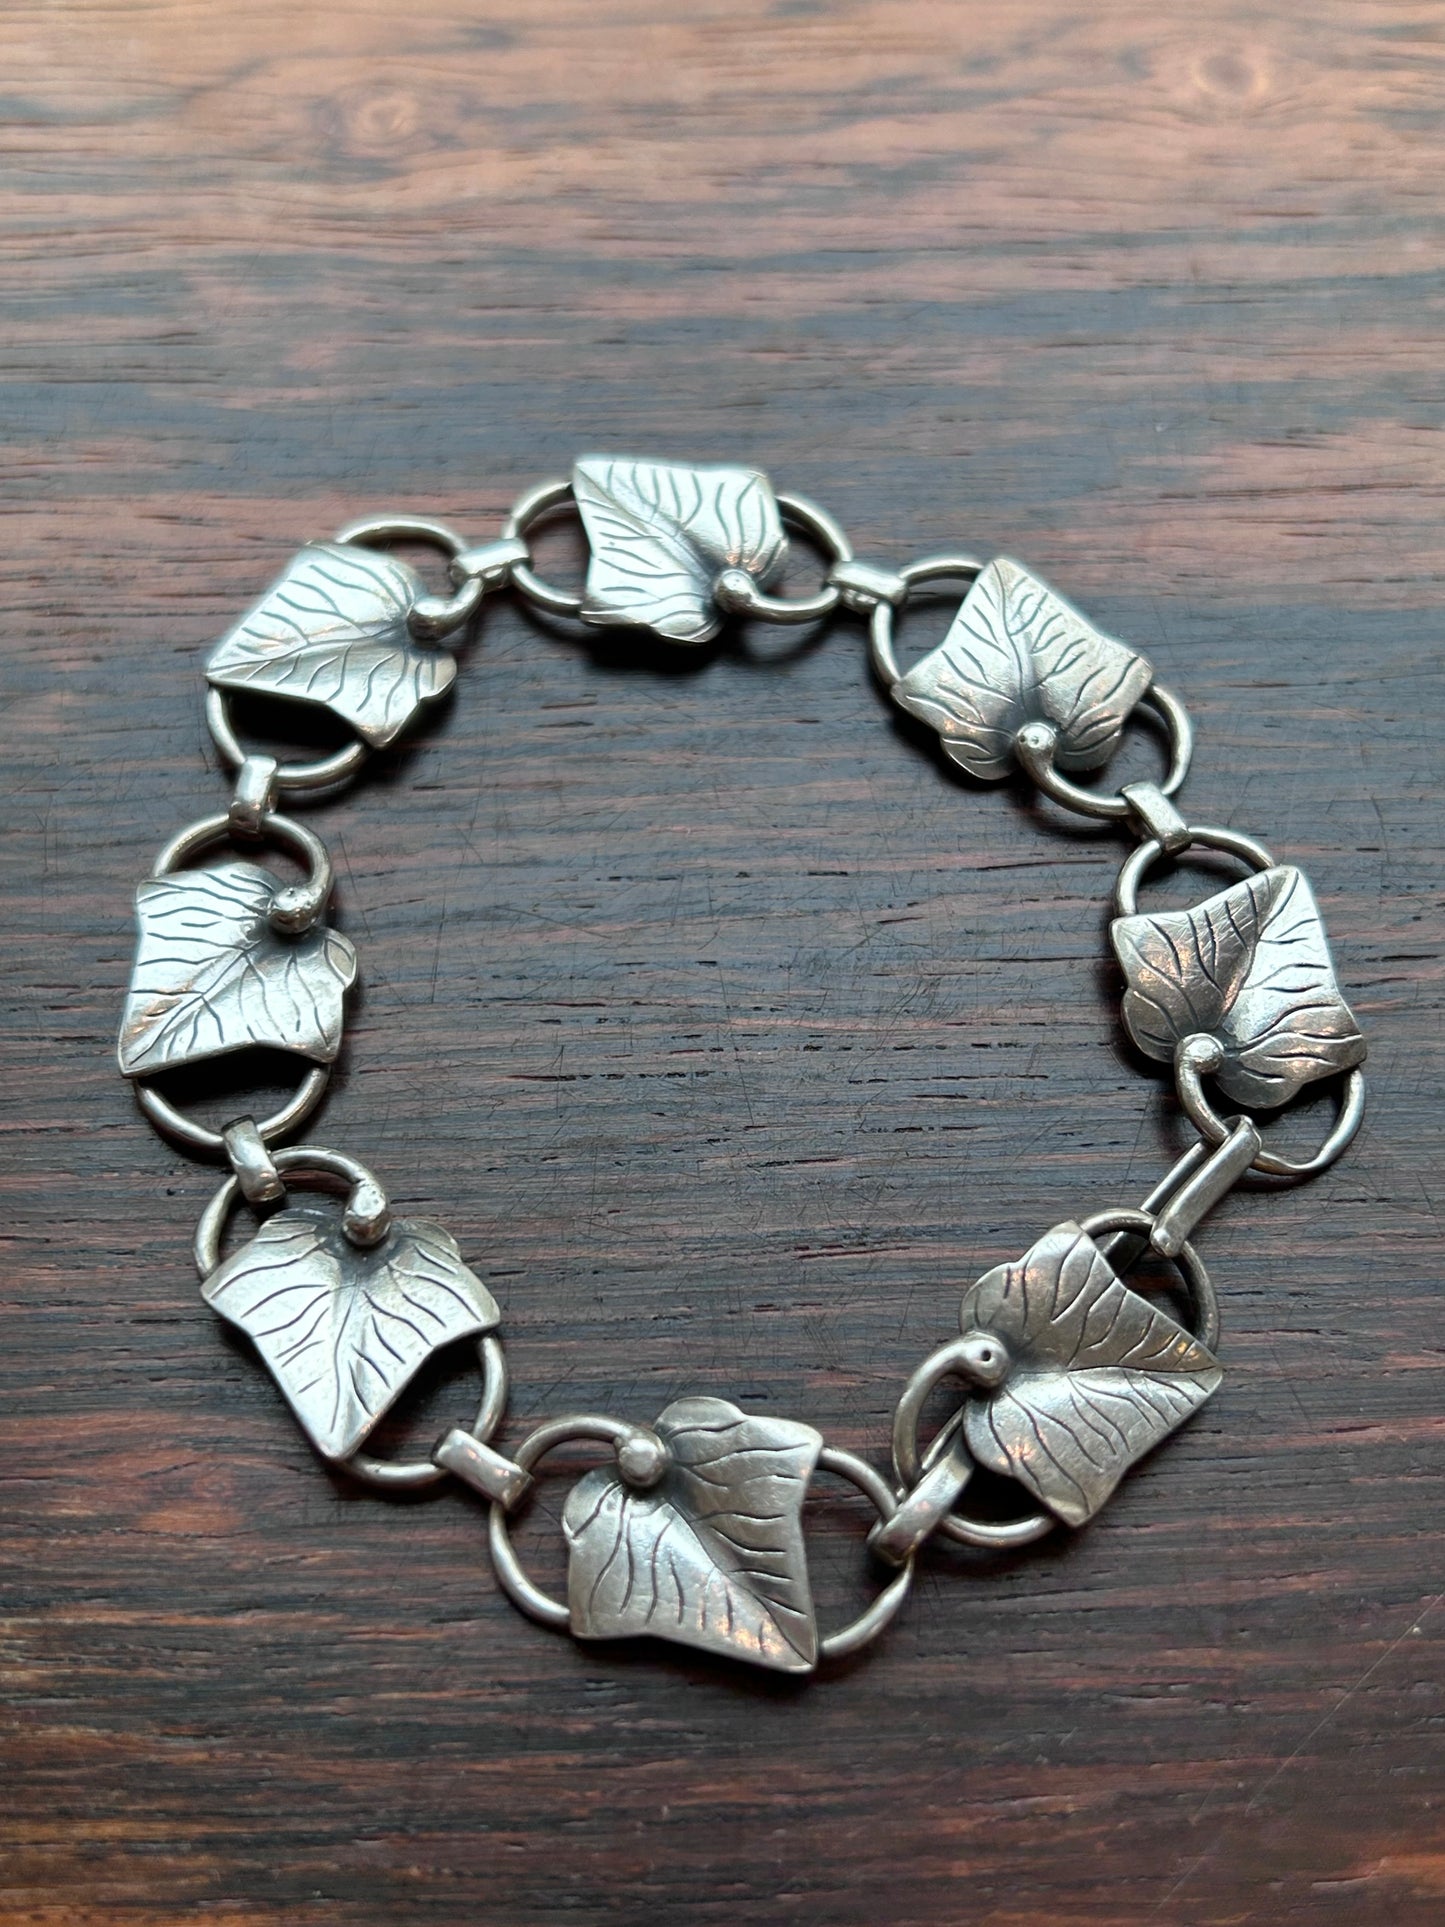 Silver bracelet with stylized leaves - Arvo Saarela